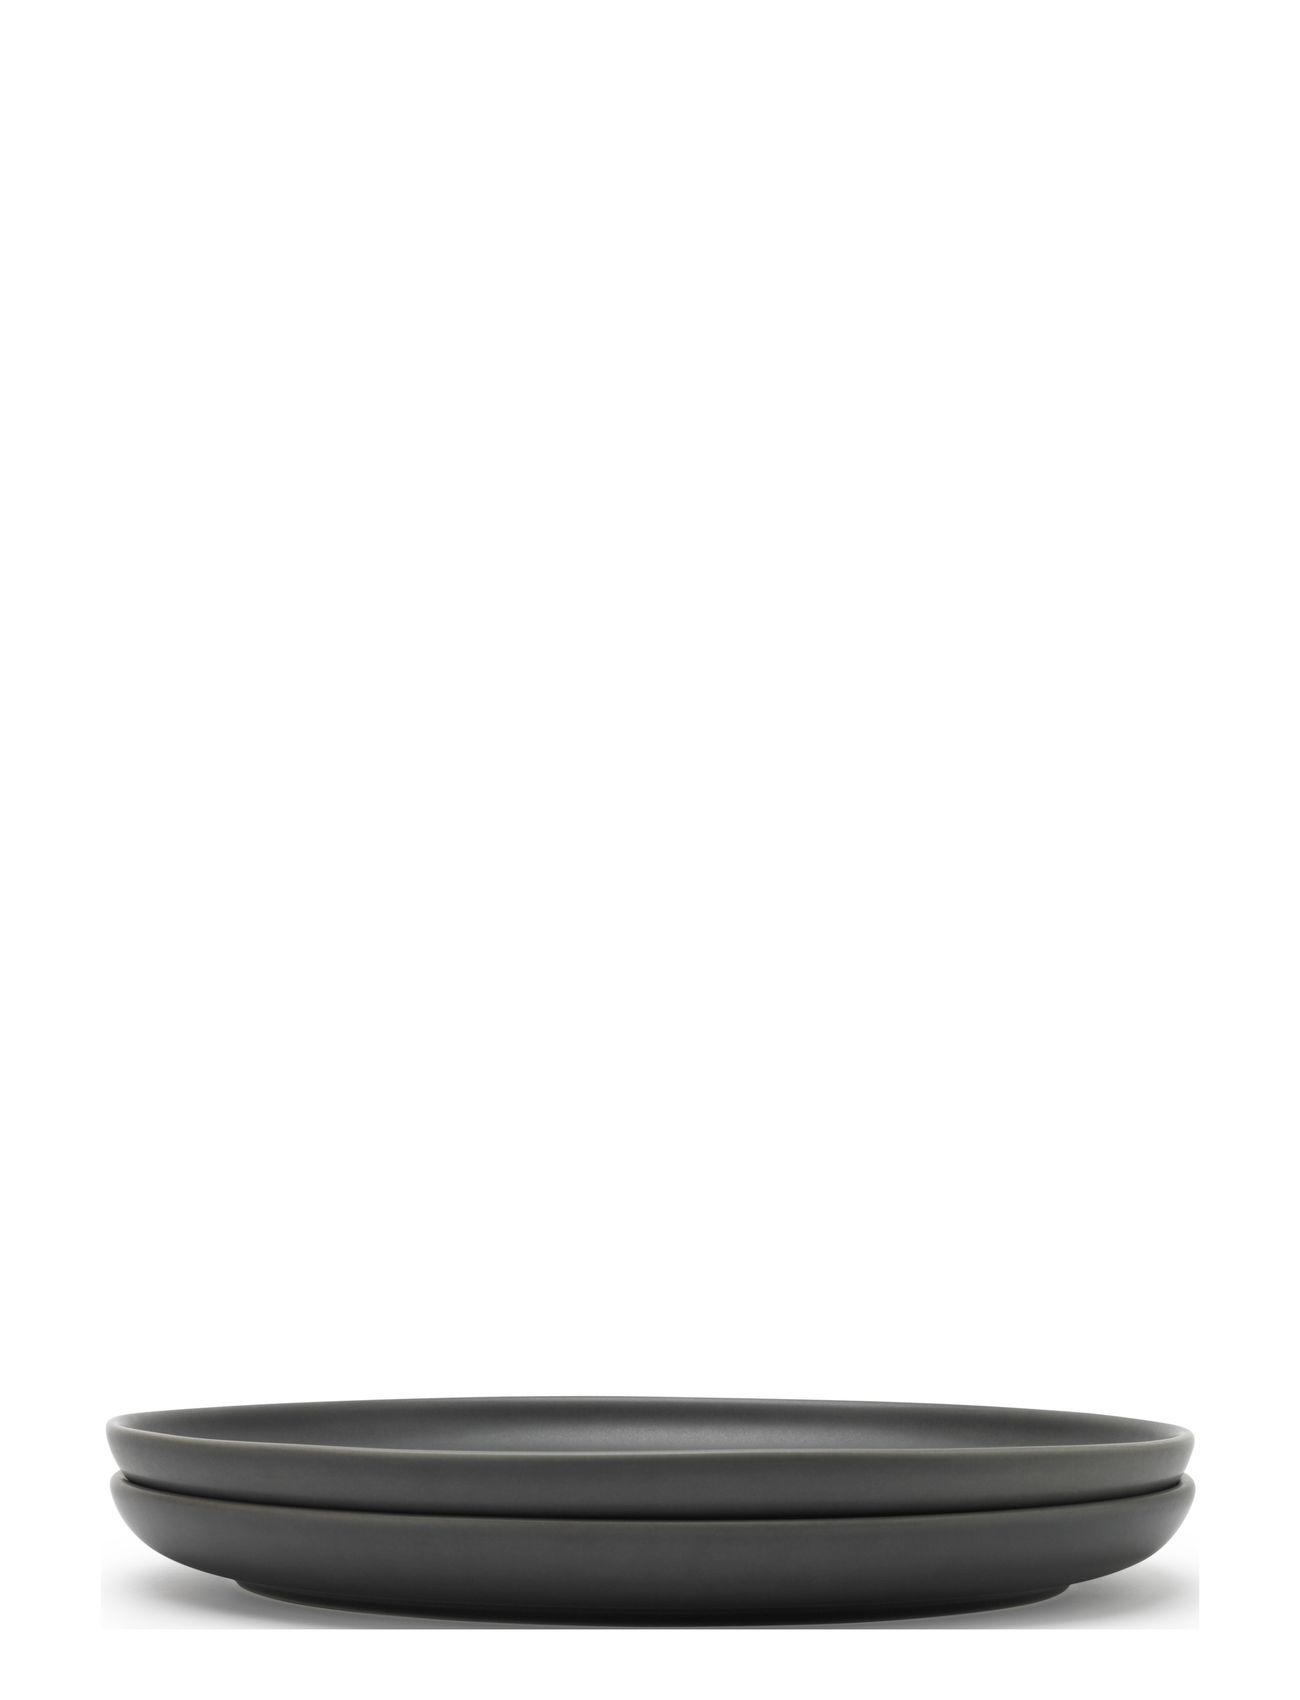 Knabstrup Keramik Tavola Tallerken, 2 Stk. Home Tableware Plates Dinner Plates Grå Knabstrup Keramik